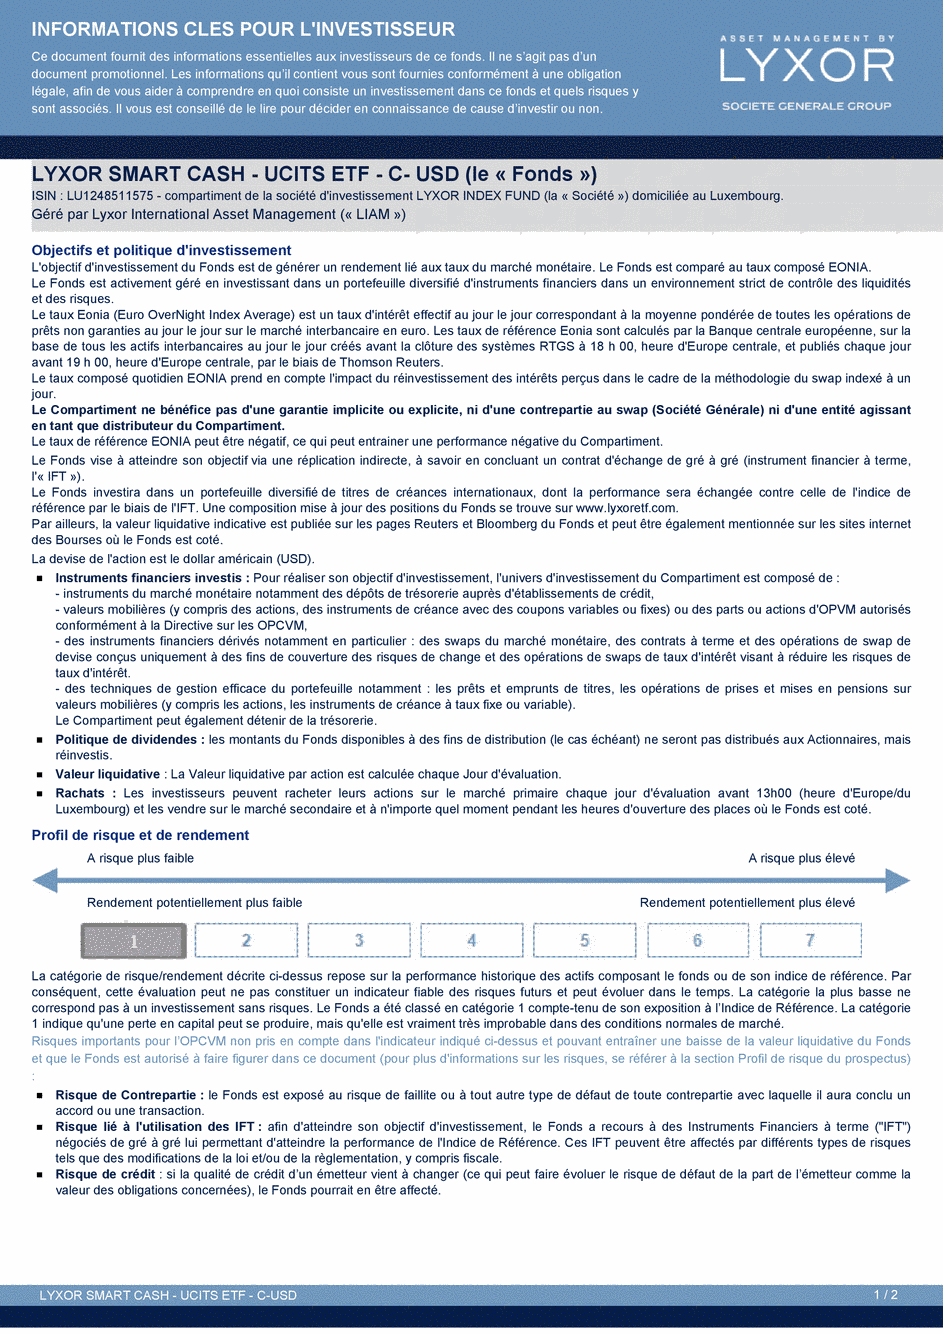 DICI Lyxor Smart Overnight Return - UCITS ETF C-USD - 30/06/2015 - Français